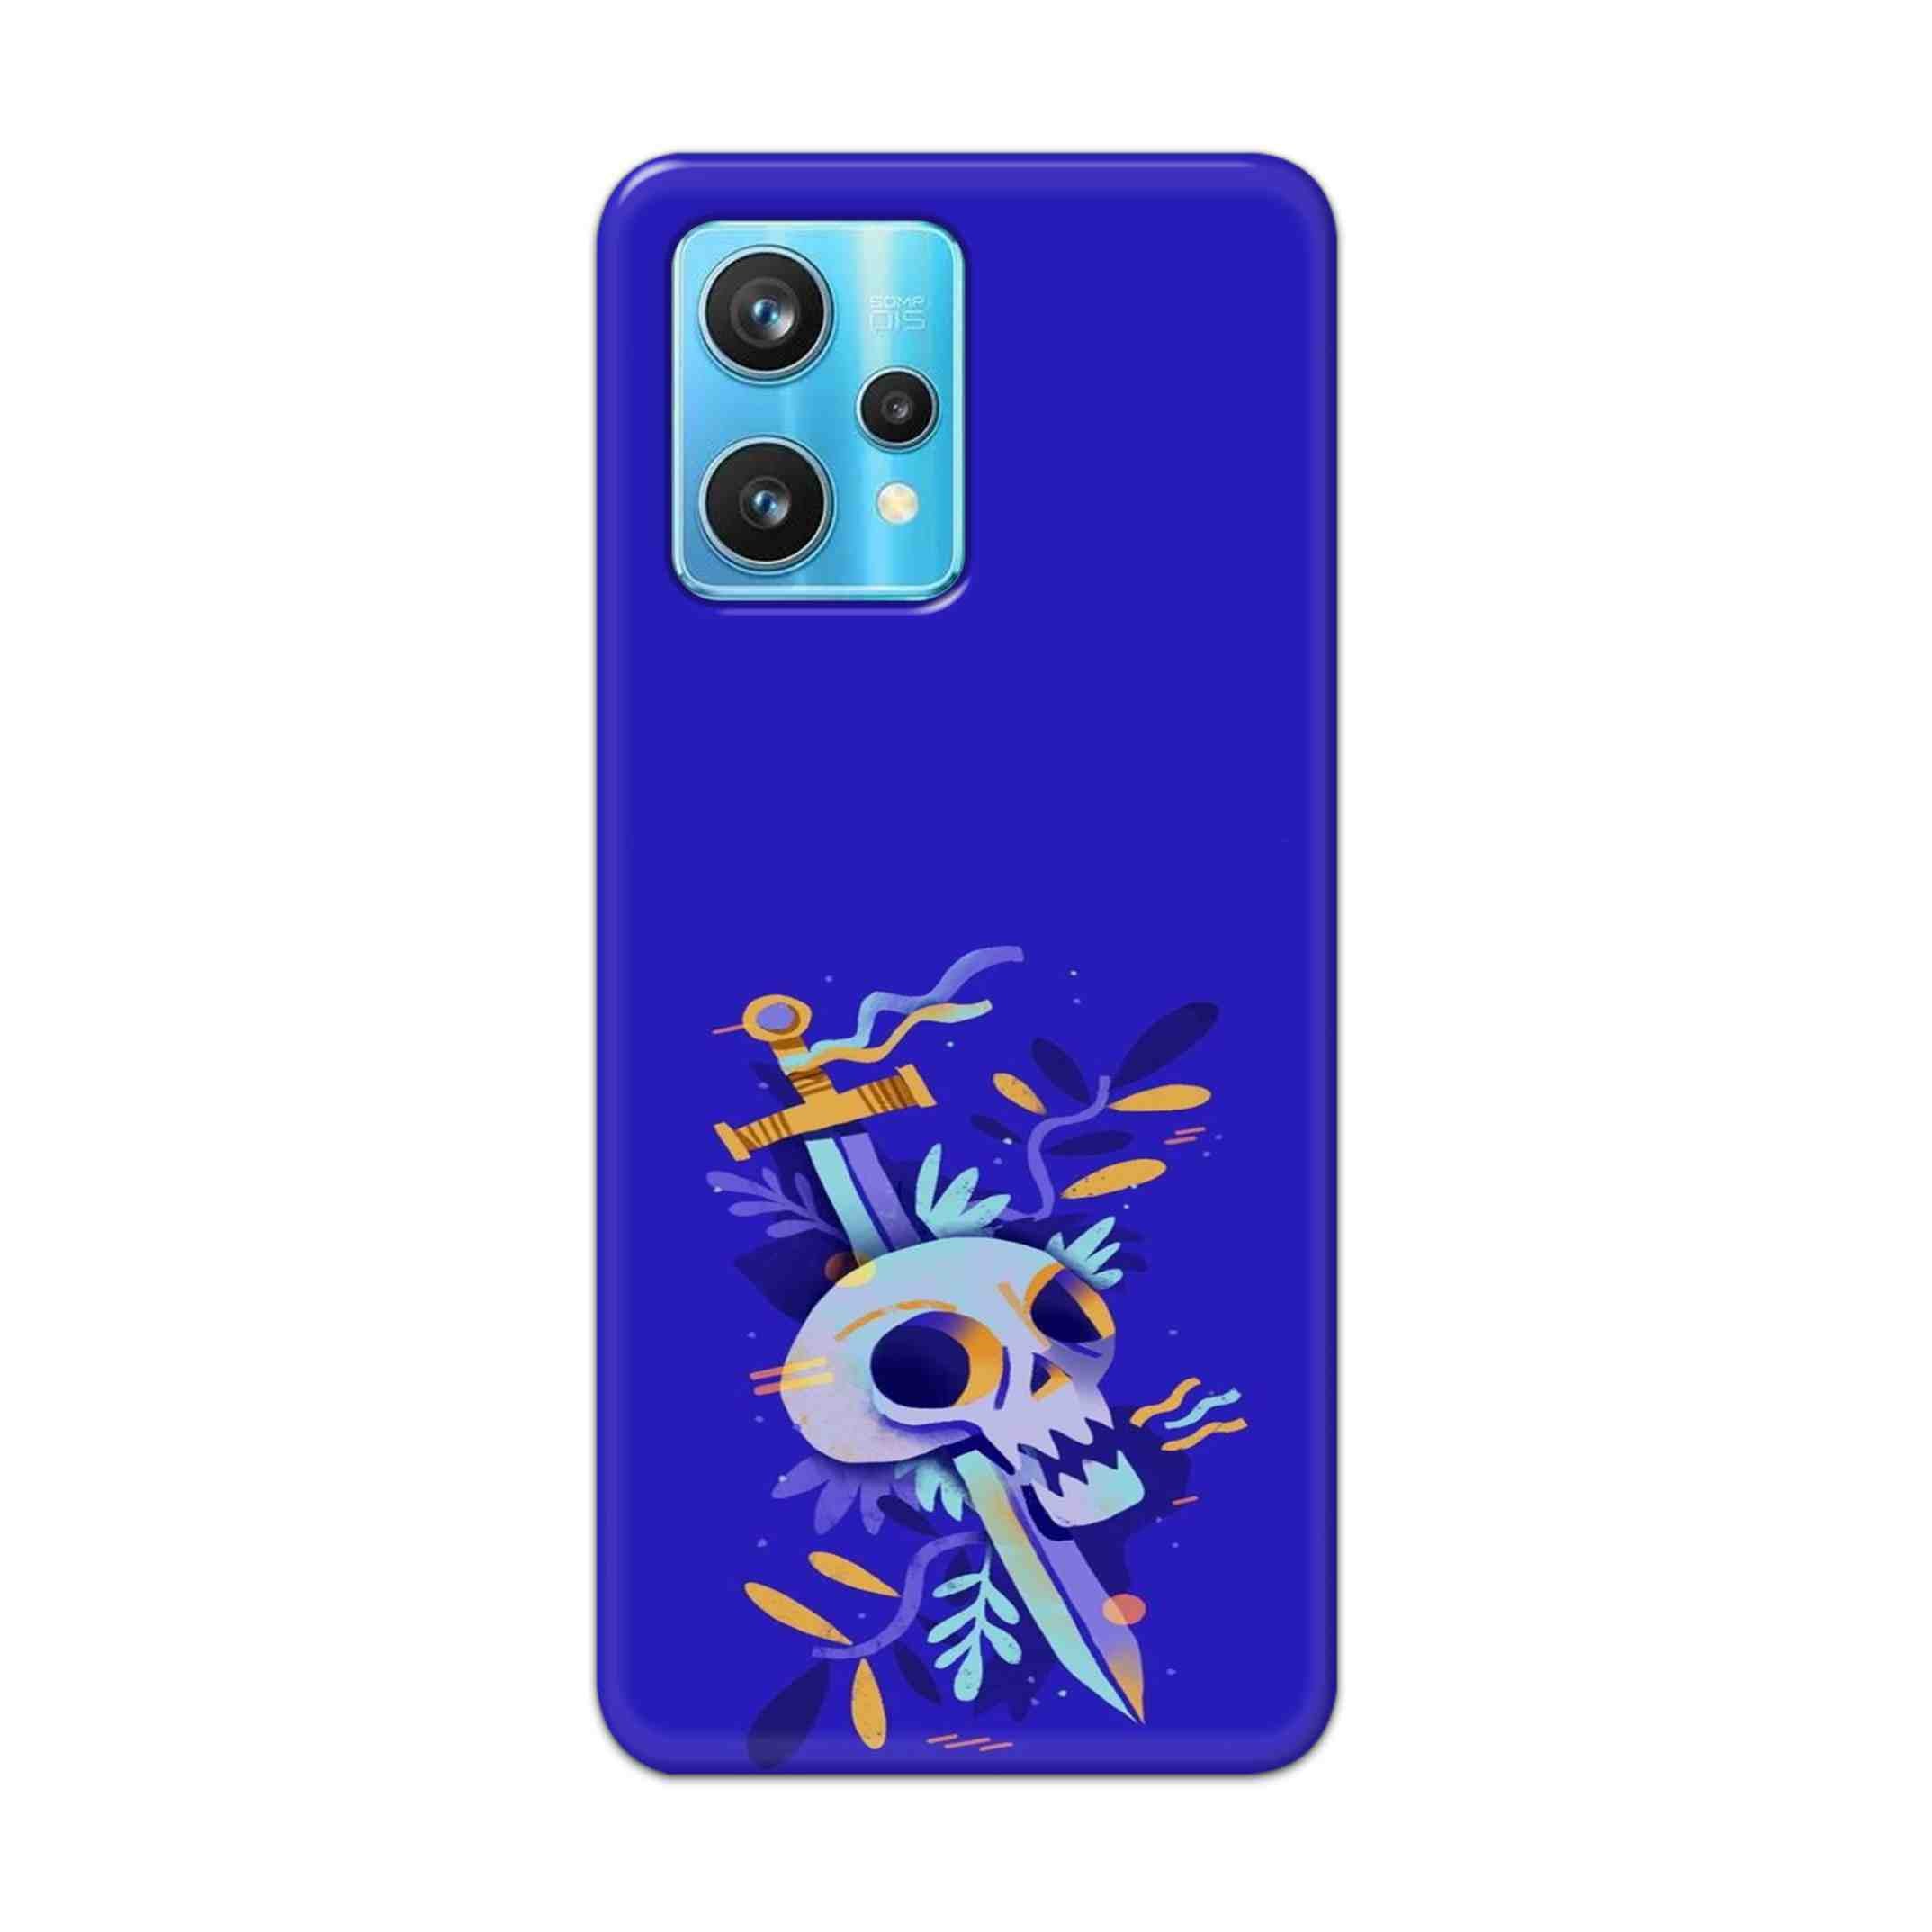 Buy Blue Skull Hard Back Mobile Phone Case Cover For Realme 9 Pro Plus Online